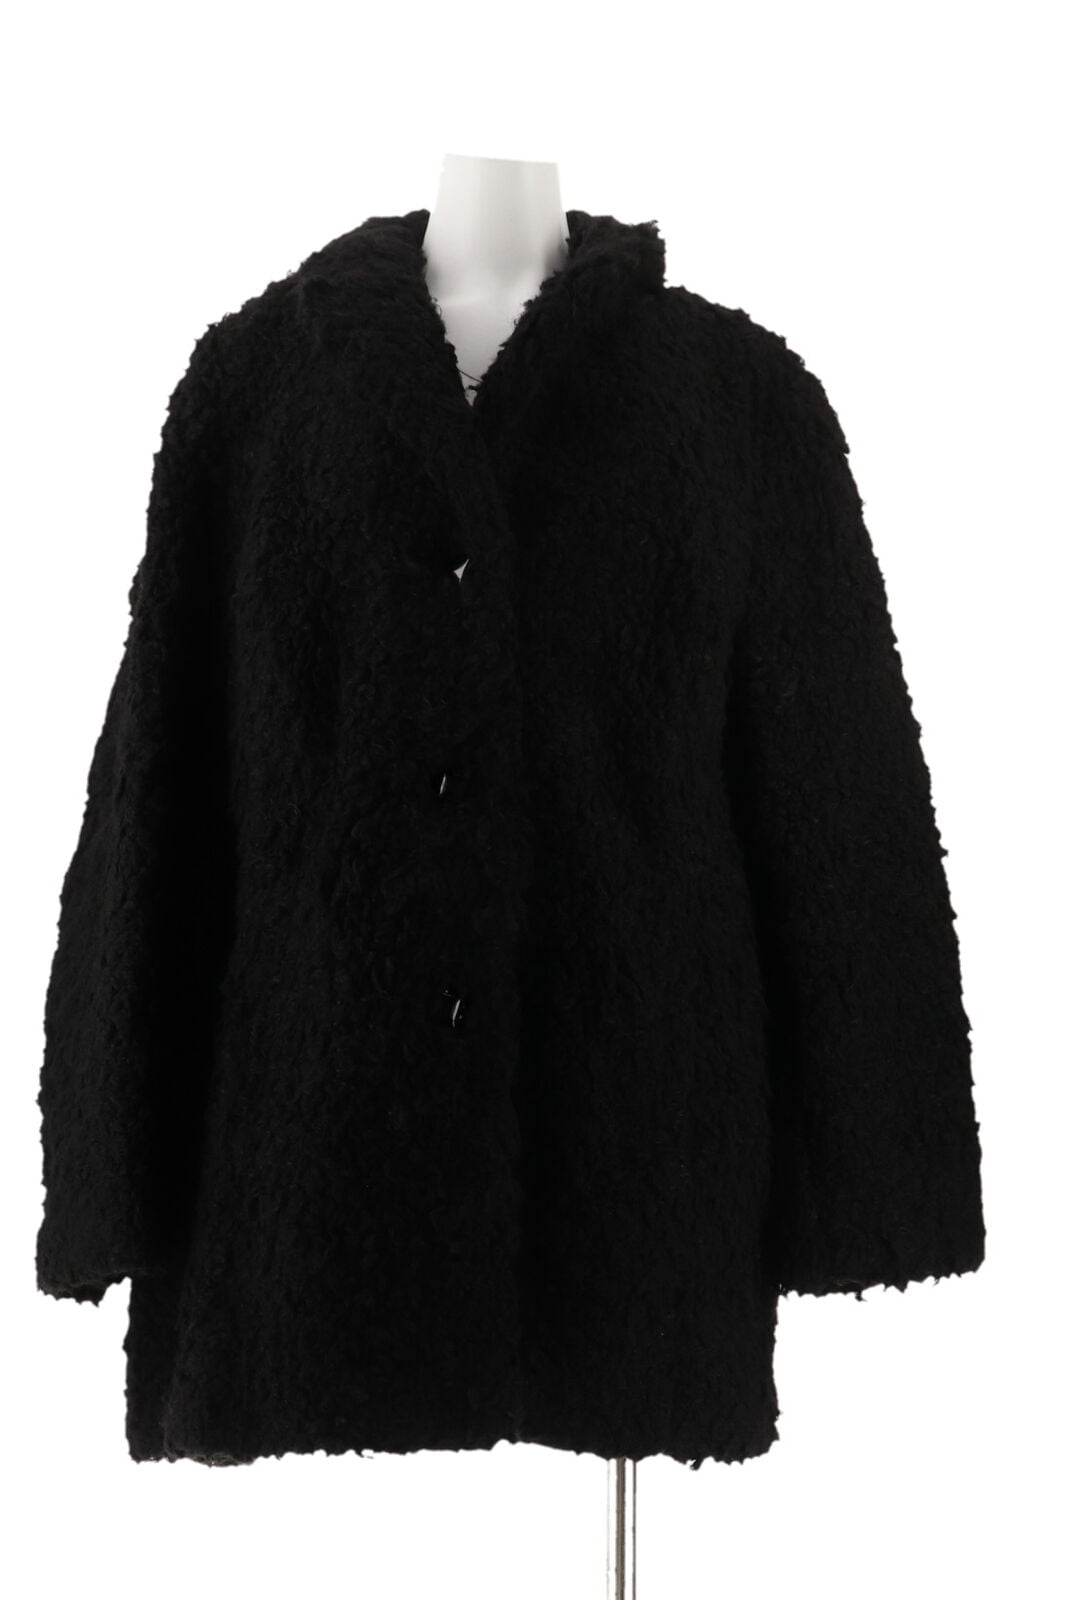 Isaac Mizrahi Live! - Isaac Mizrahi Faux Fur Coat A271096 - Walmart.com